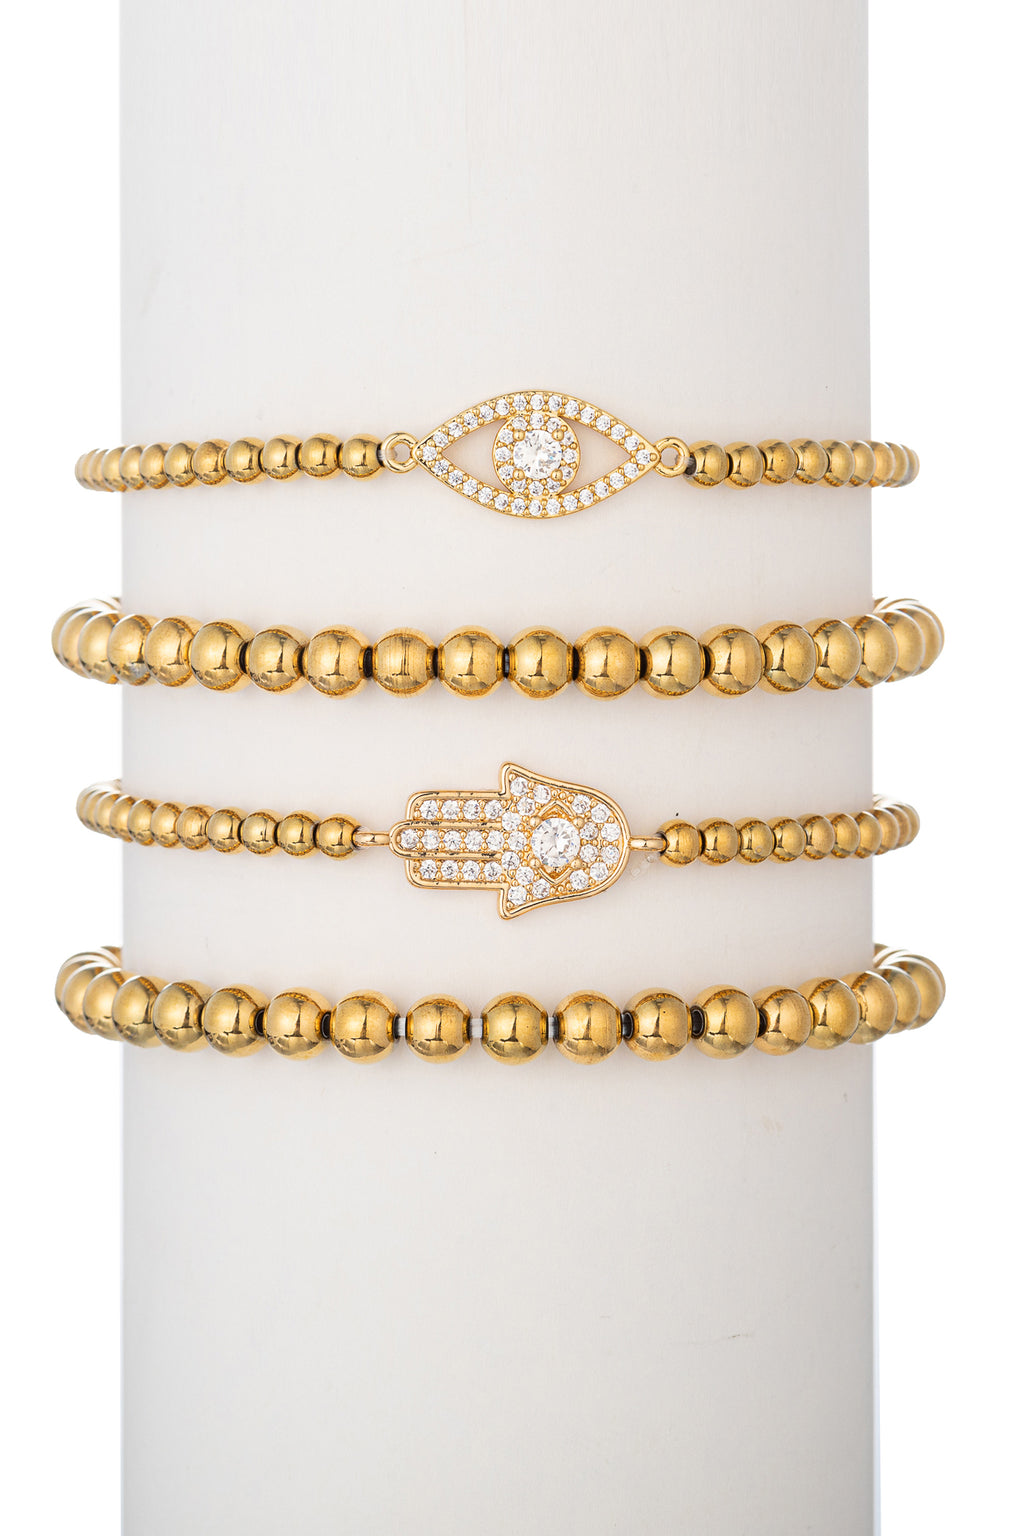 Gold tone titanium beaded bracelet set with CZ crystal evil eye and hamsa hand pendants.